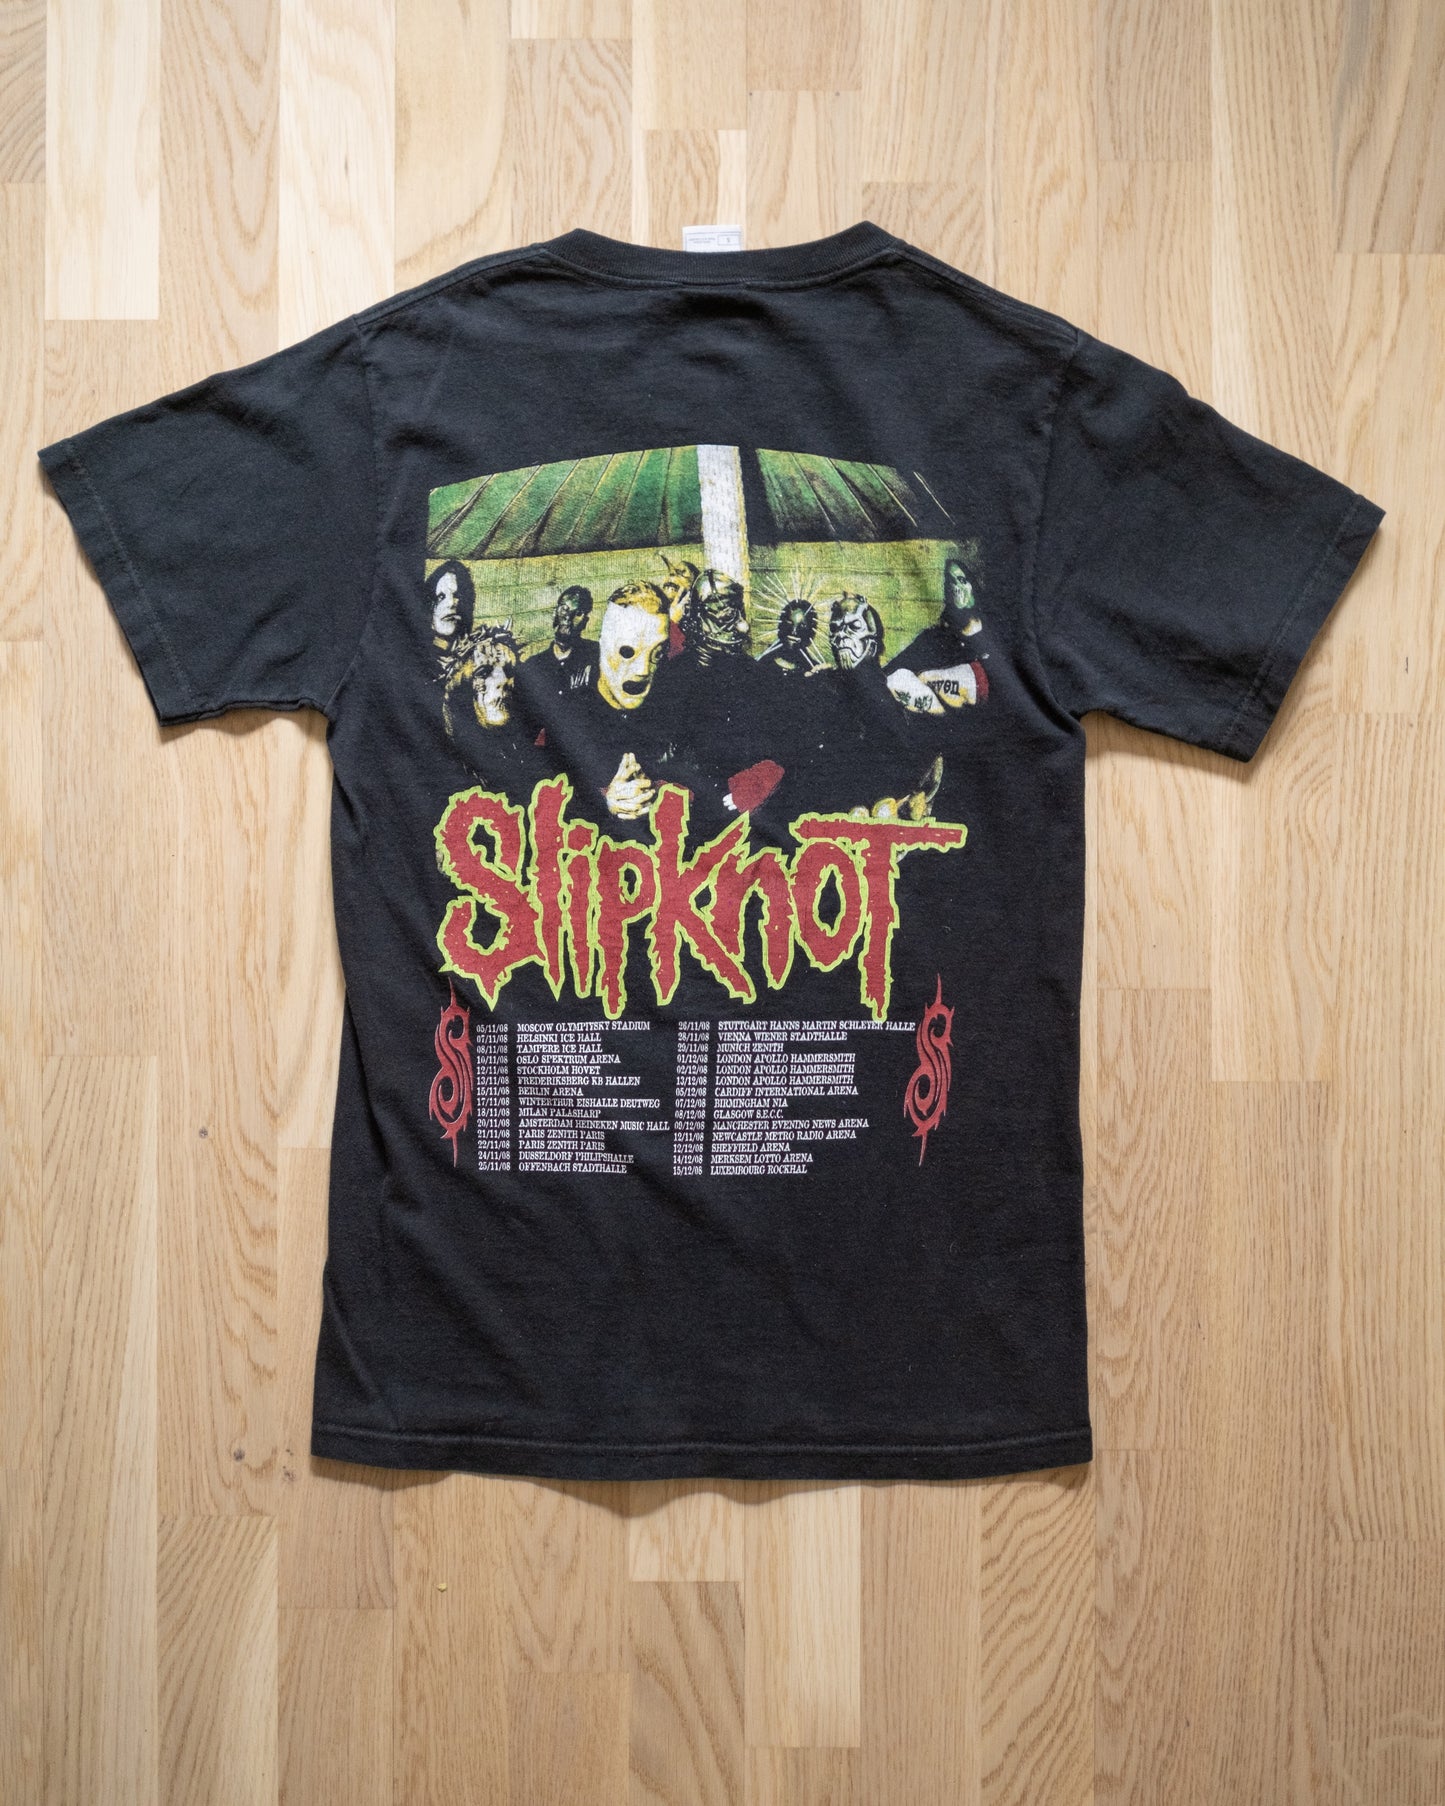 Slipknot All Hope Is Gone 2008 European Tour T-Shirt Size S